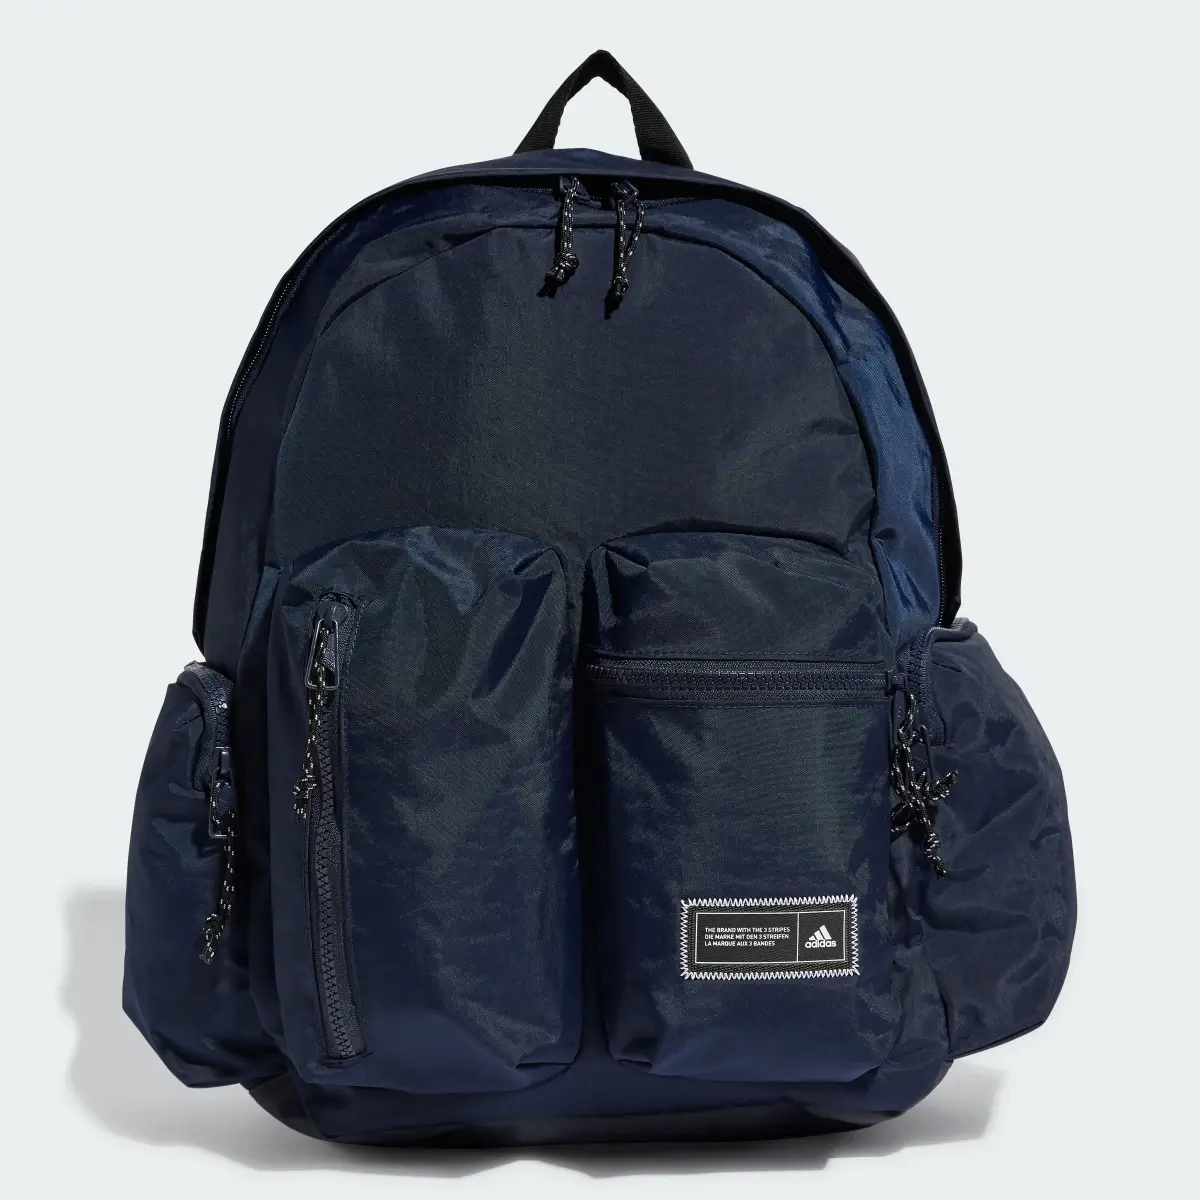 Adidas Back To University Classic Backpack. 1